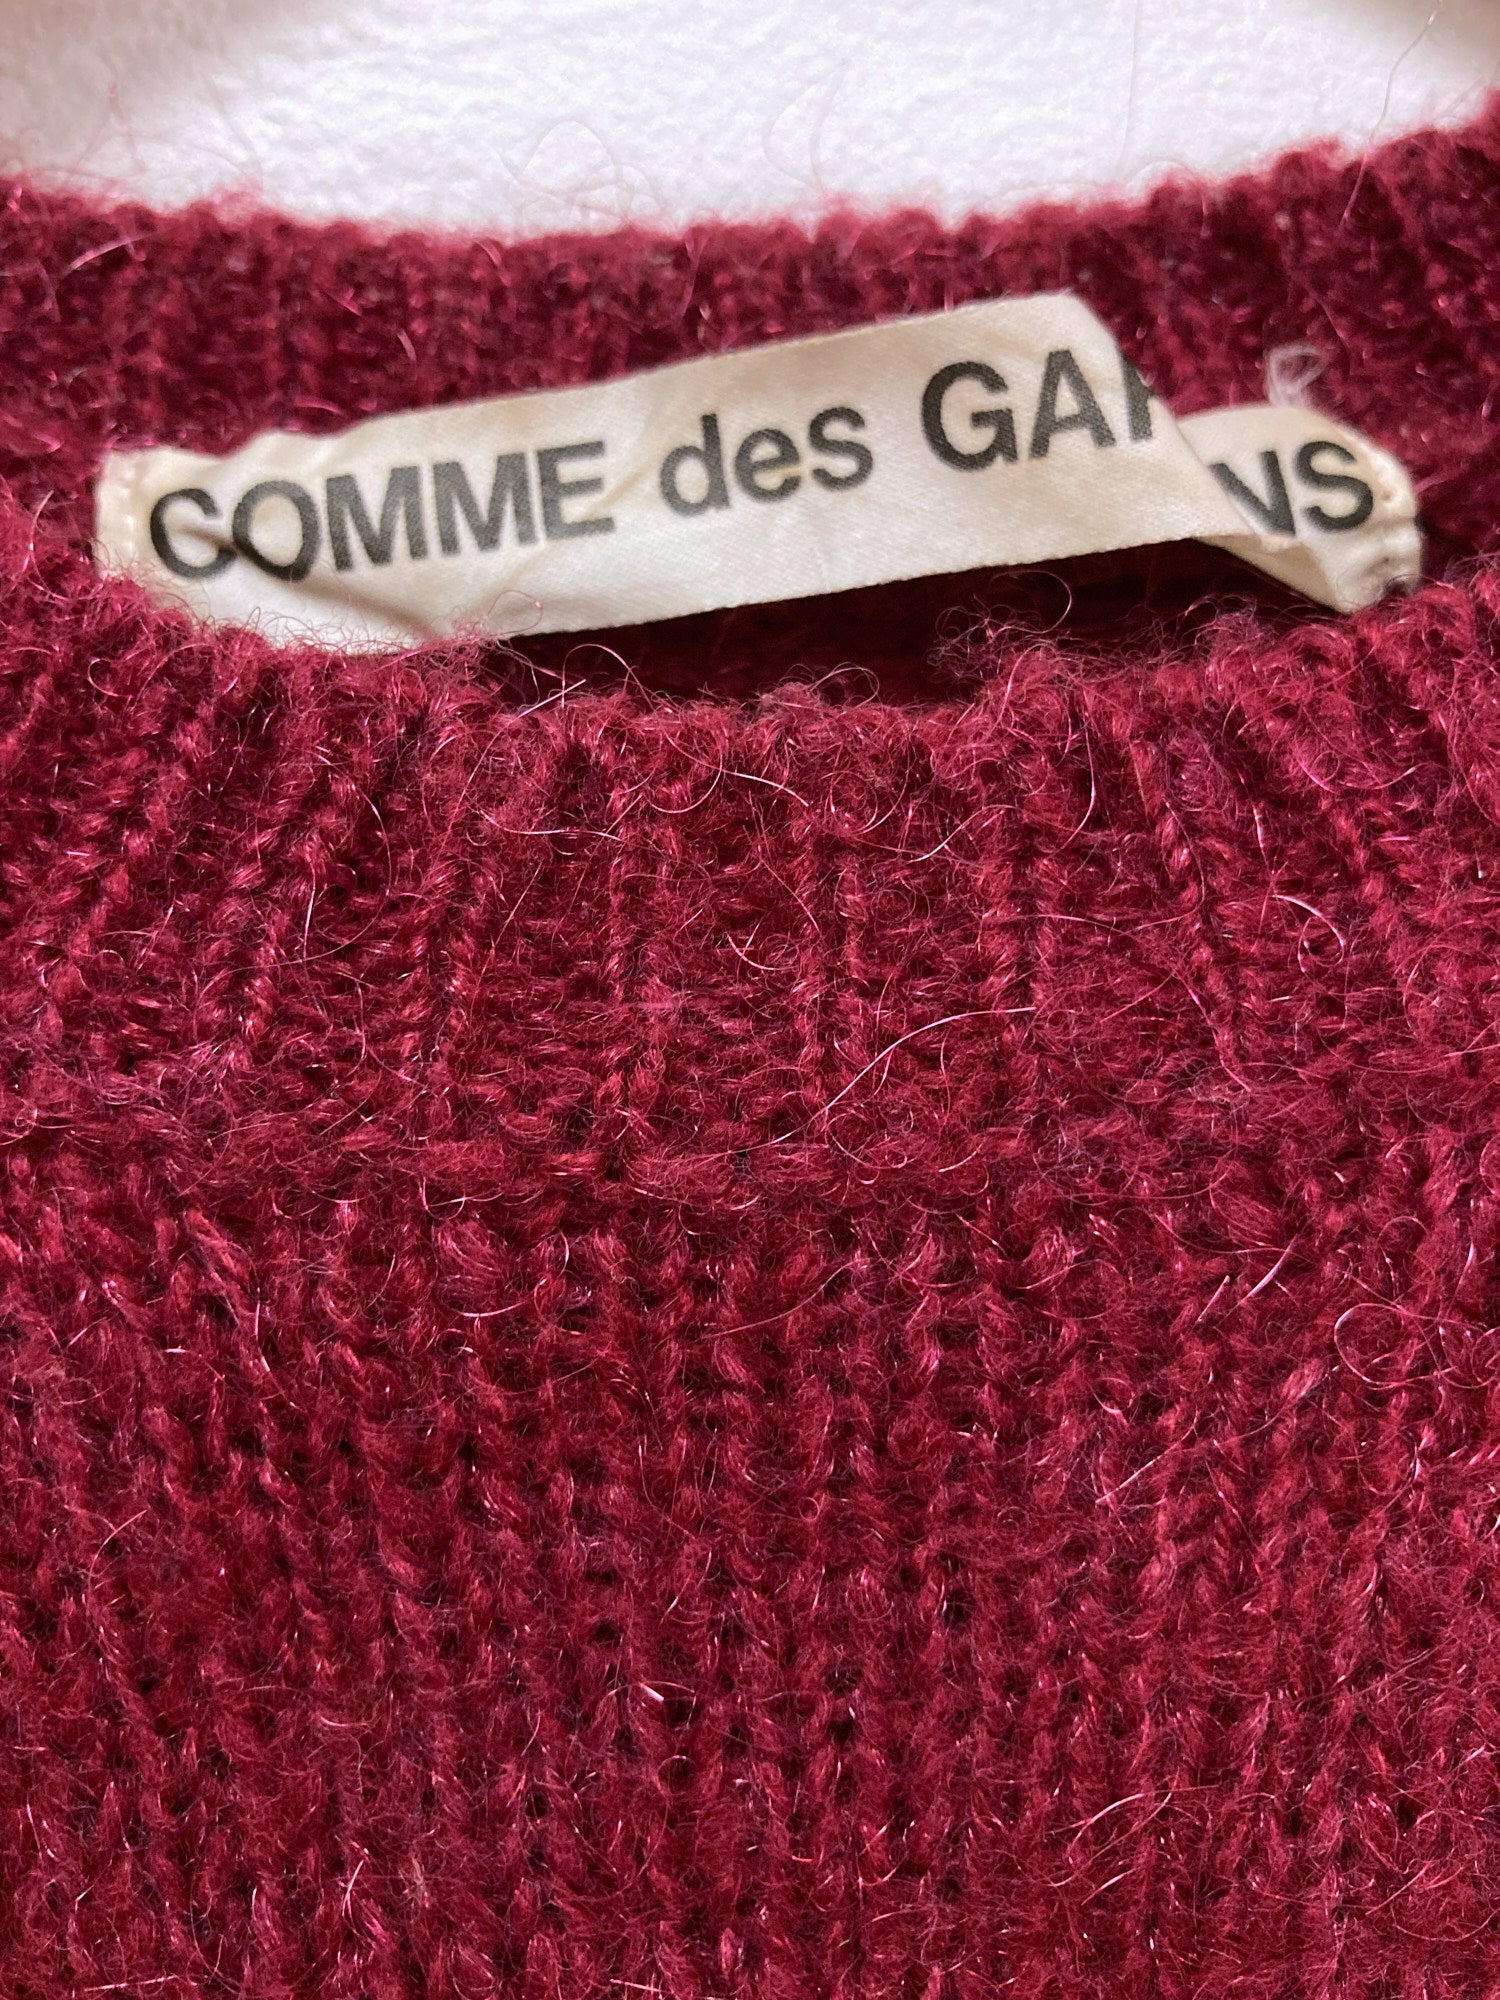 Comme des Garcons 1999 burgundy or mauve-ish wool nylon jumper